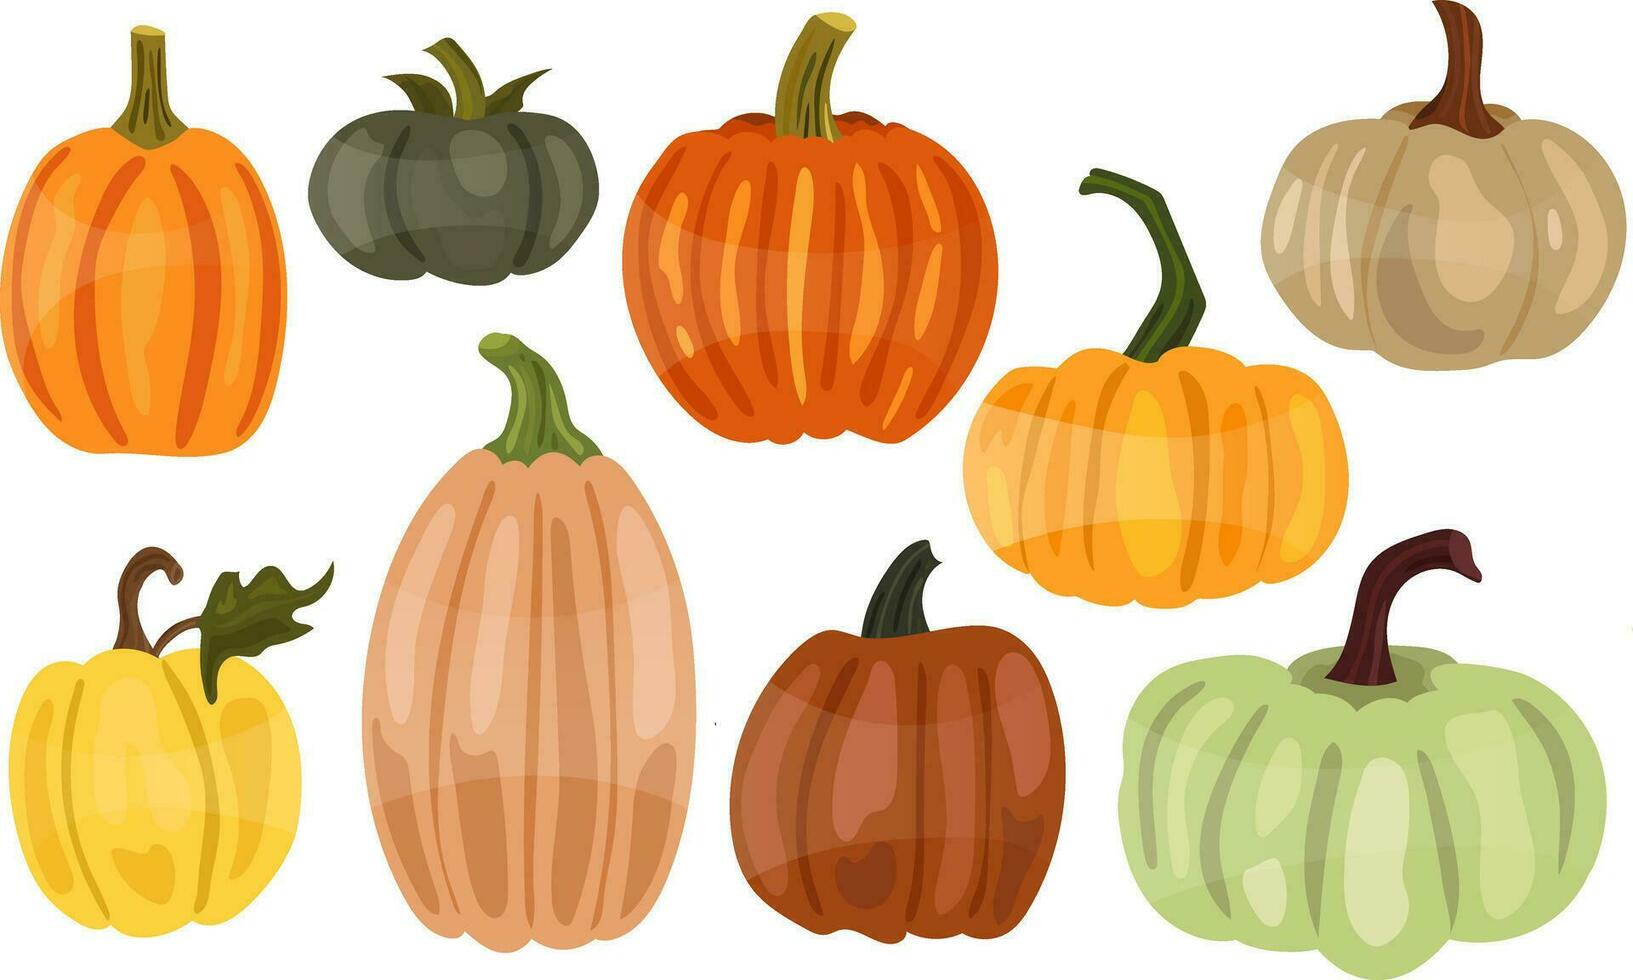 Pumpkins. Set of pumpkins. Halloween, holiday. Autumn, season, food. Vegetarian. Autumn pumpkins, food. Vegetables, flat style, illustration, different pumpkins, different colors vector